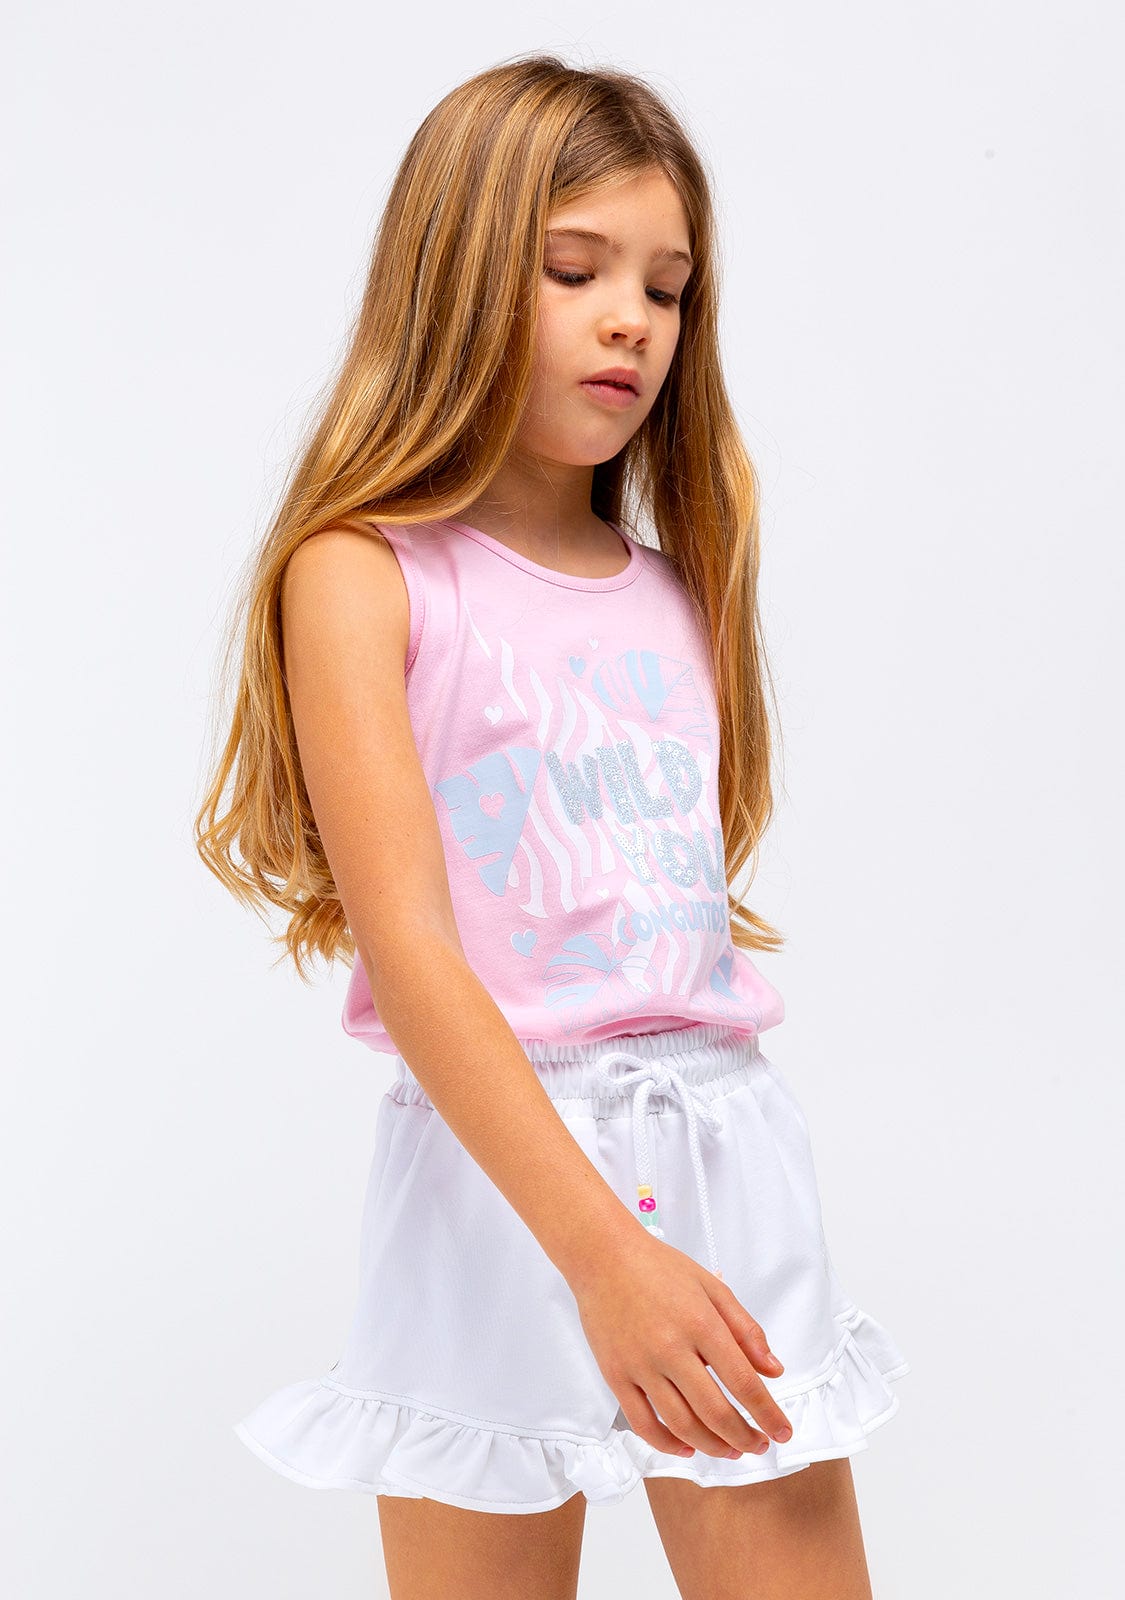 CONGUITOS TEXTIL Clothing Girl's Pink Zebra Glitter Top